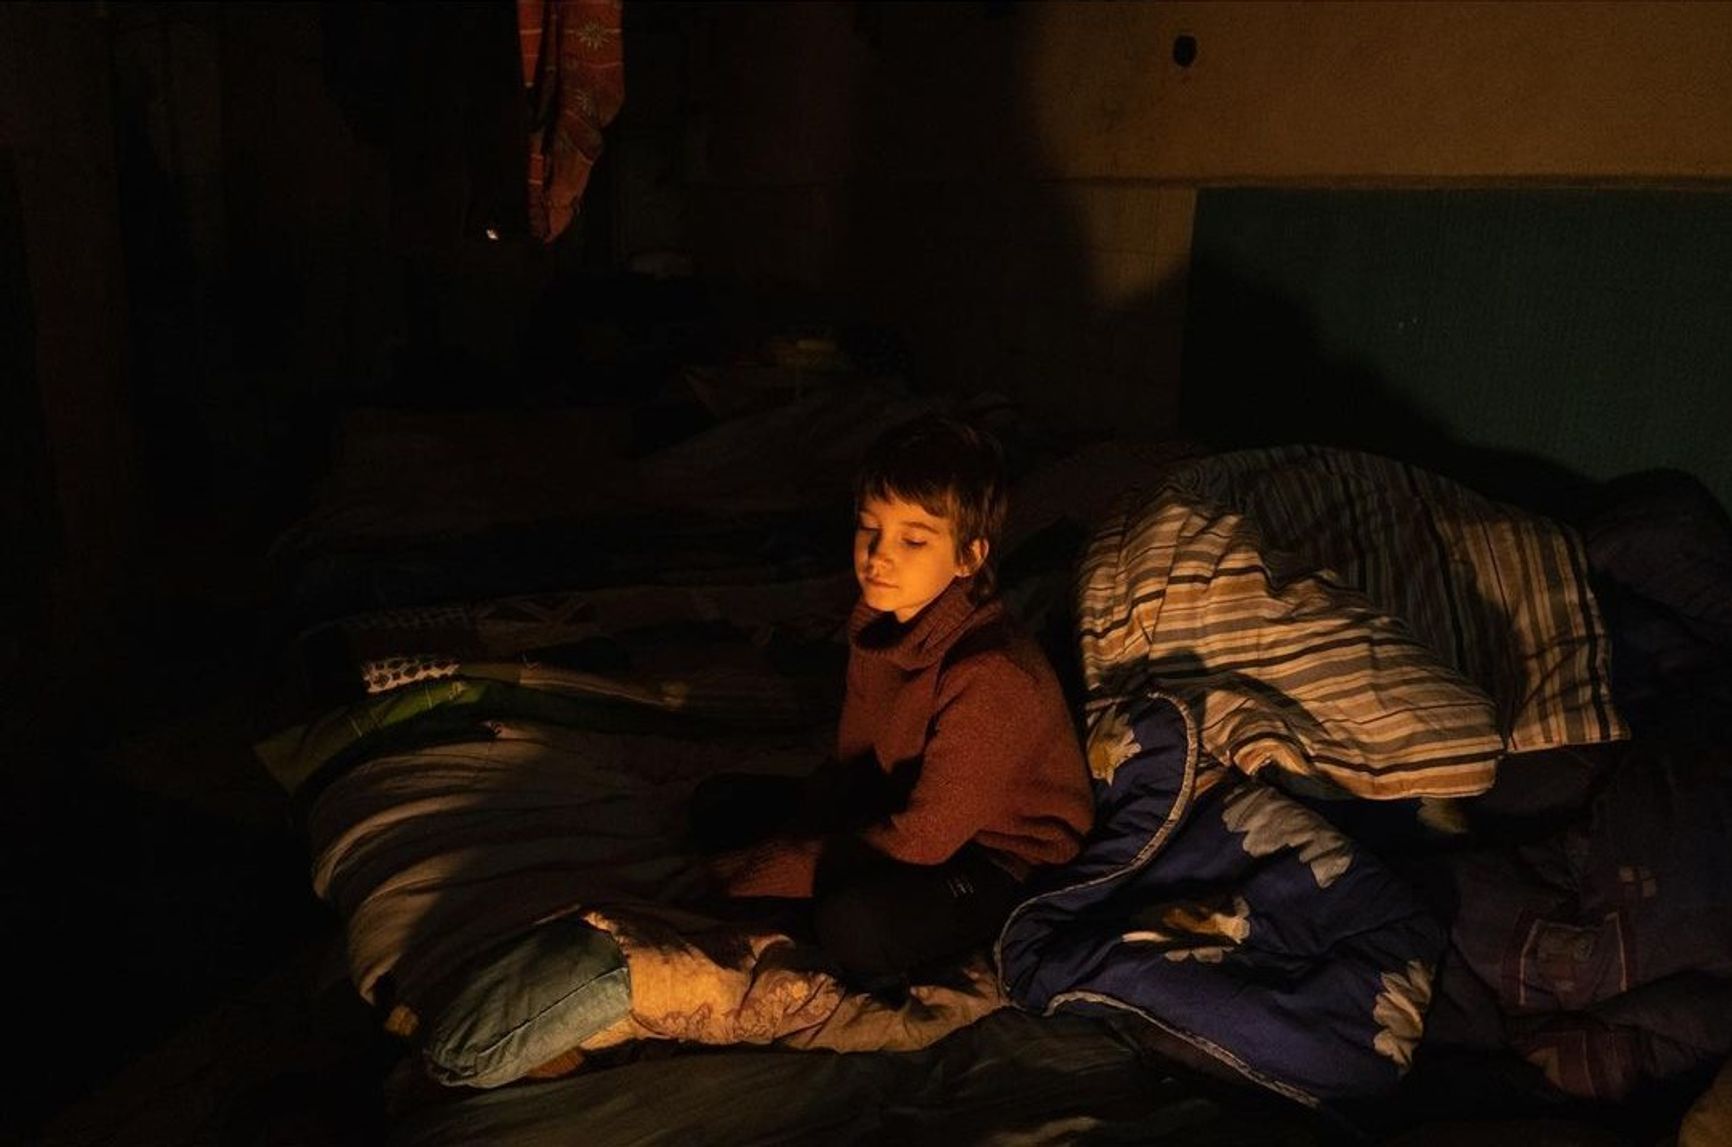 11-летняя Милана в подвале, Бахмут